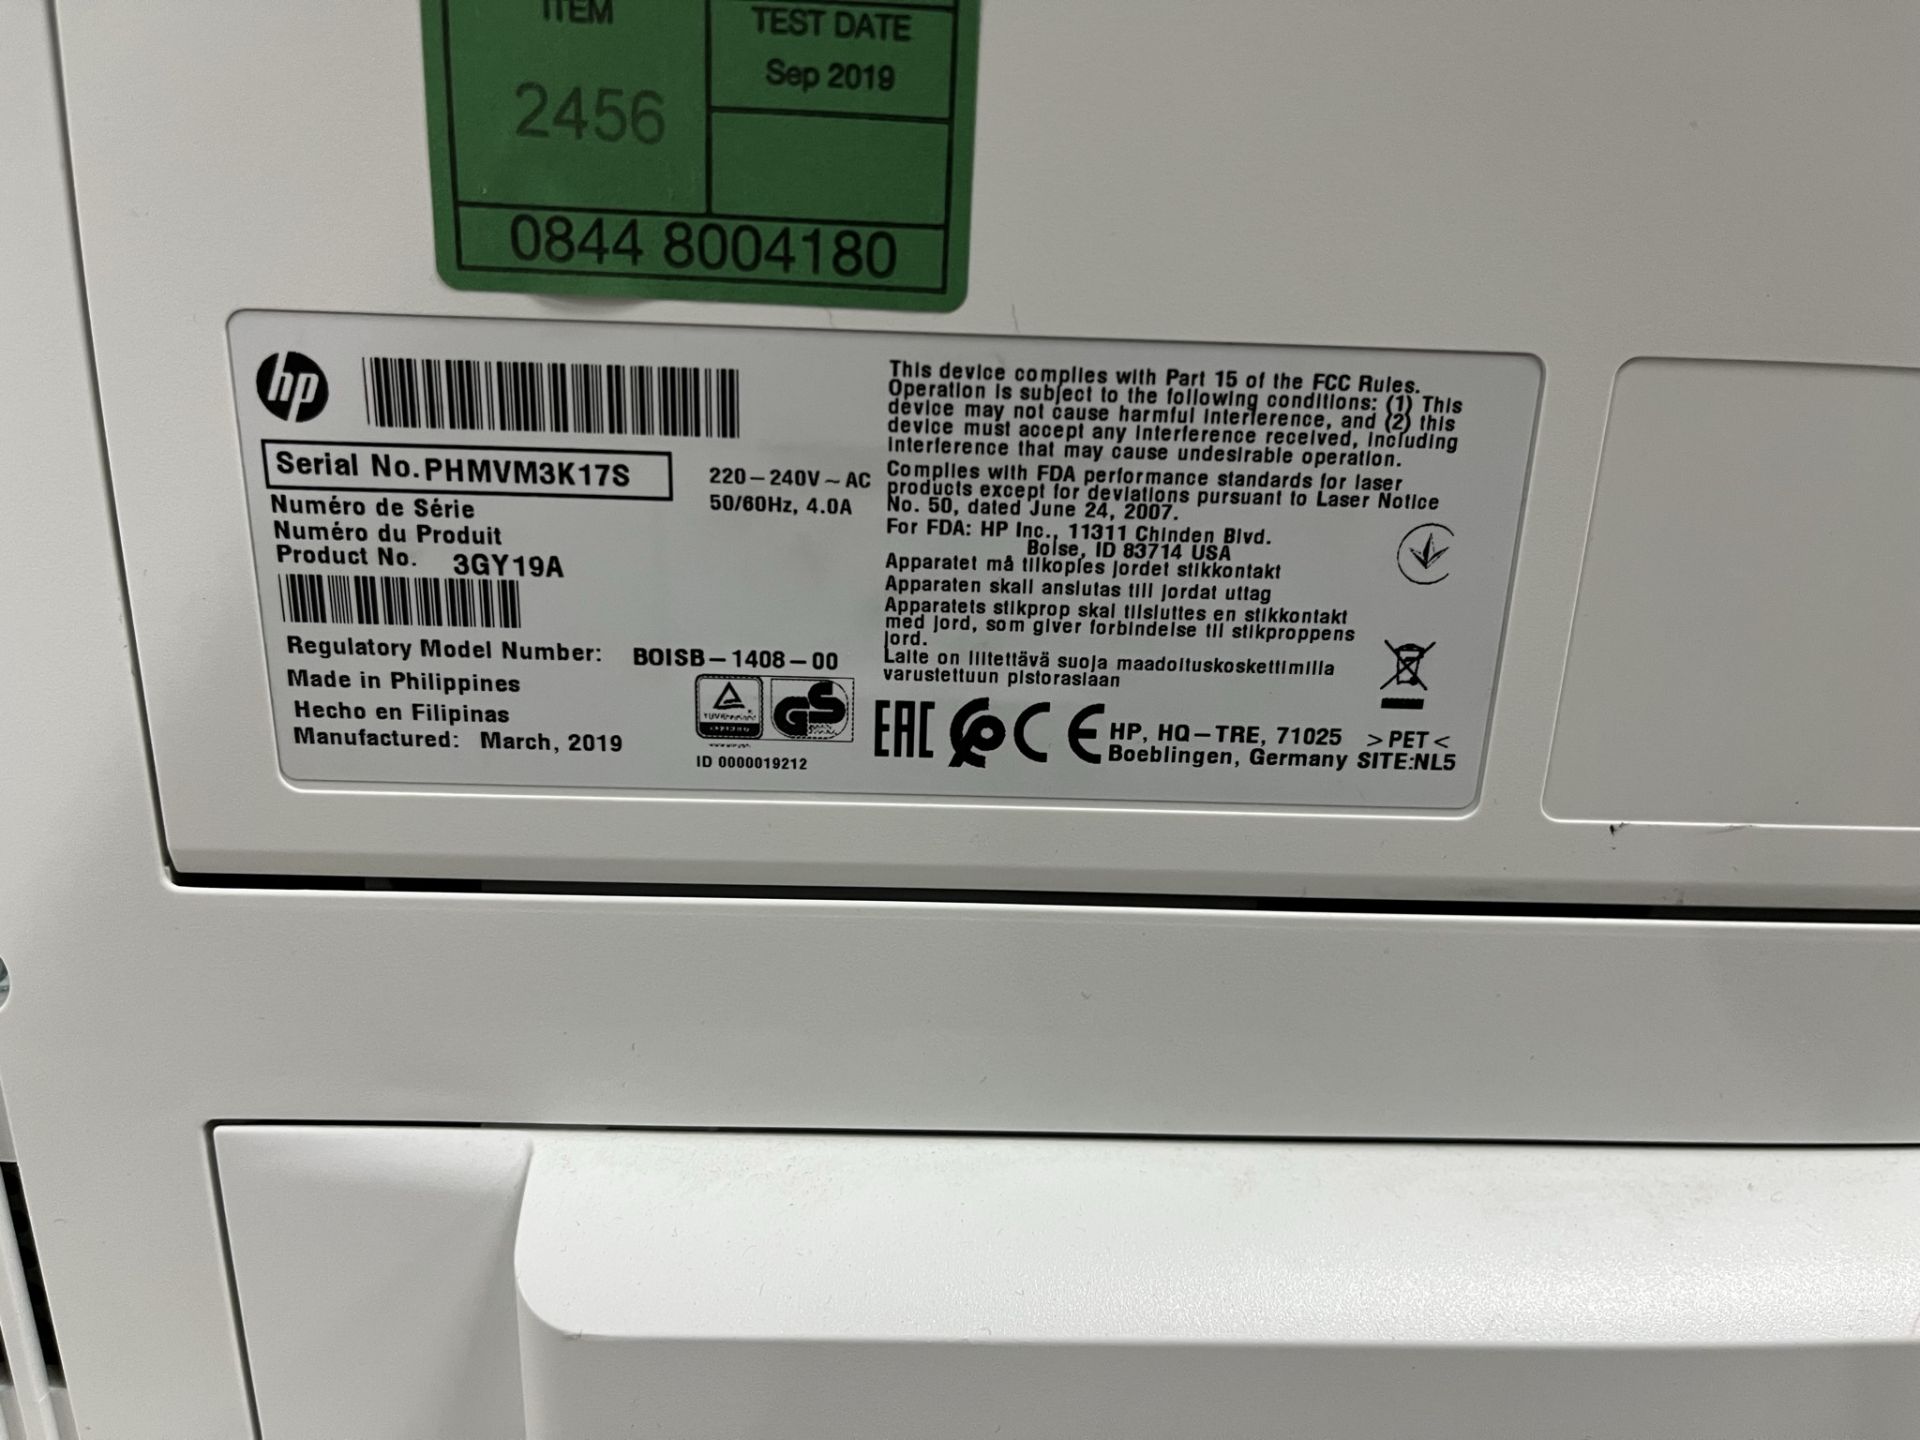 HP BOISB-1408-00 Multifunction Printer - Image 11 of 12